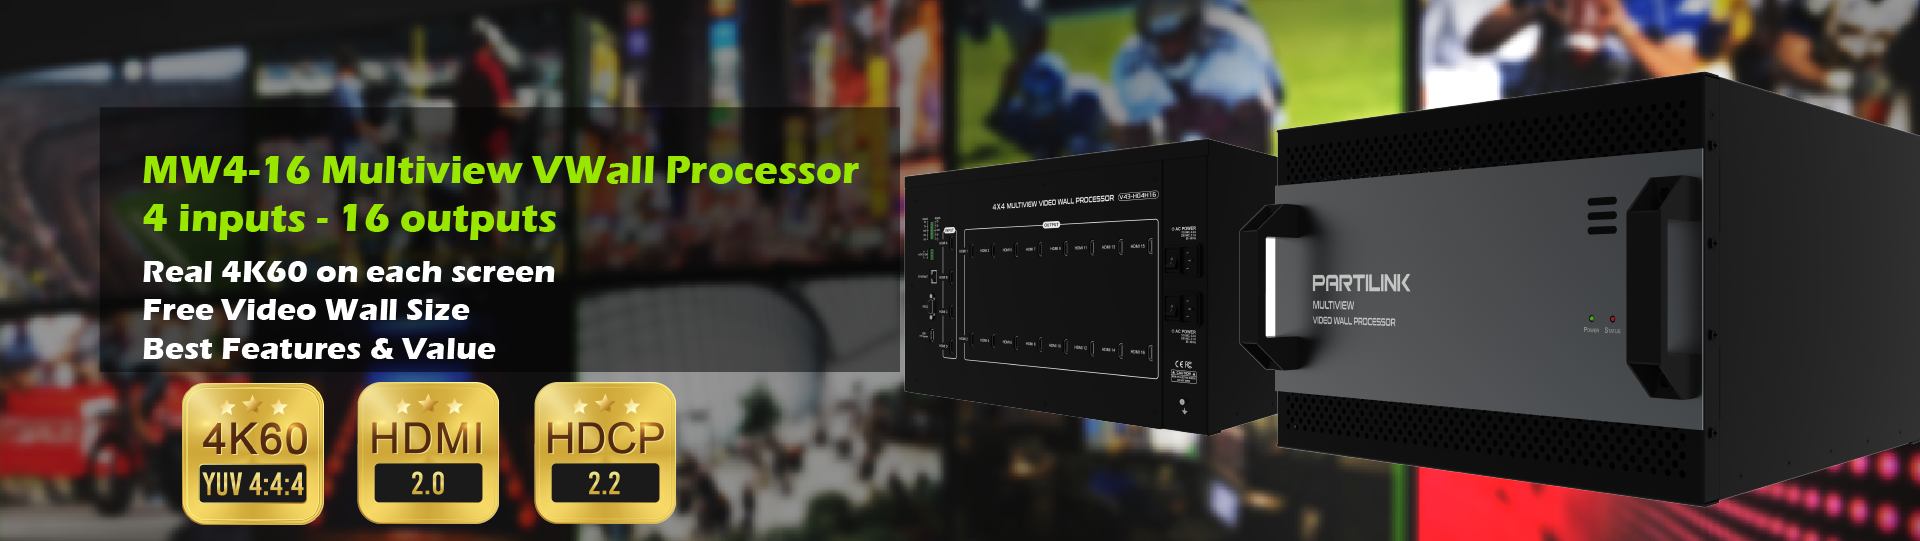 HDMI 2.0 Multiview Video Wall Processor